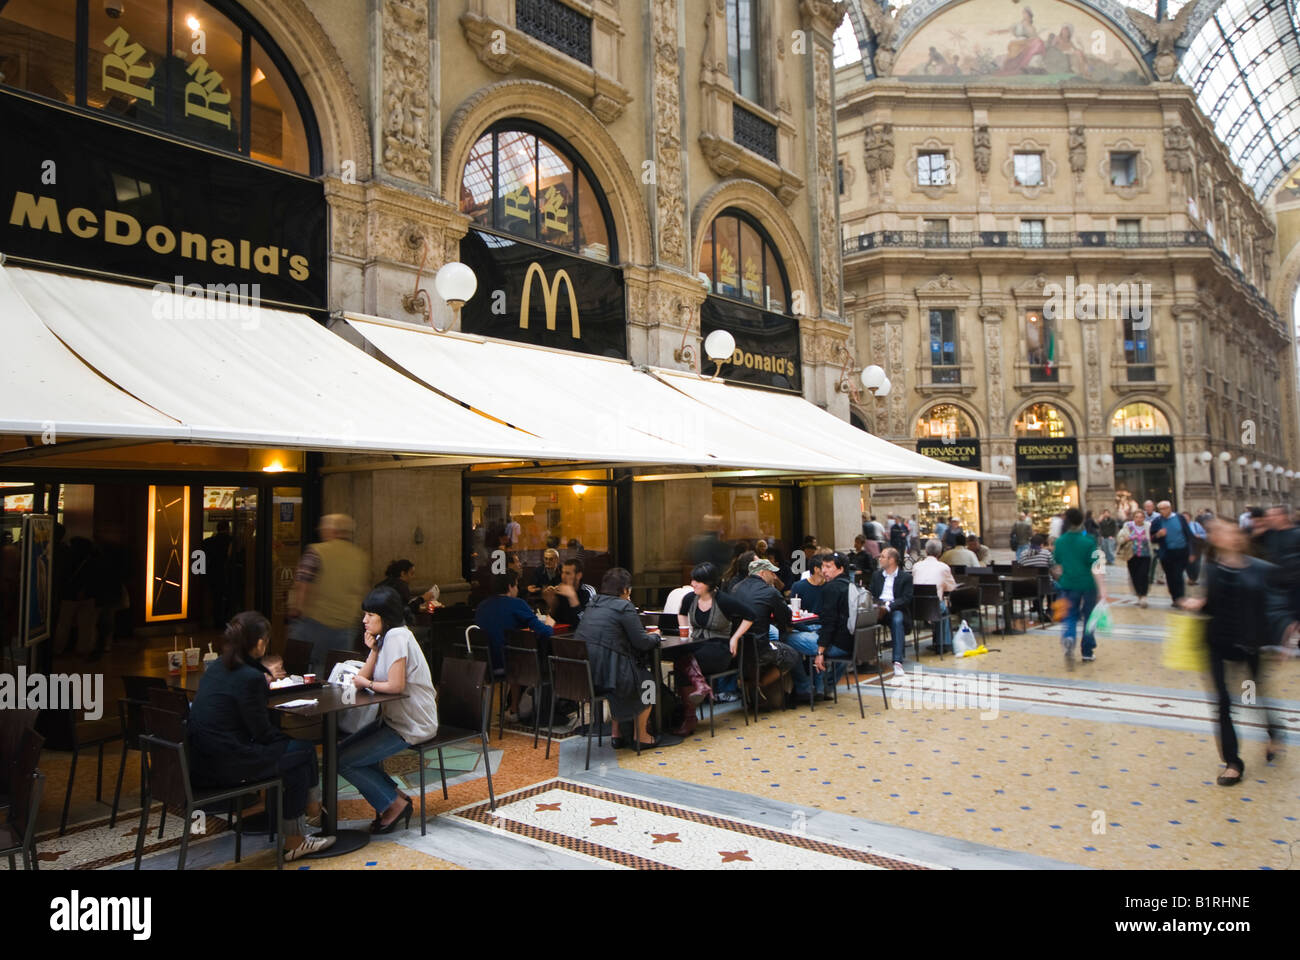 Mcdonalds in Milan Italy Stock Photo - Alamy